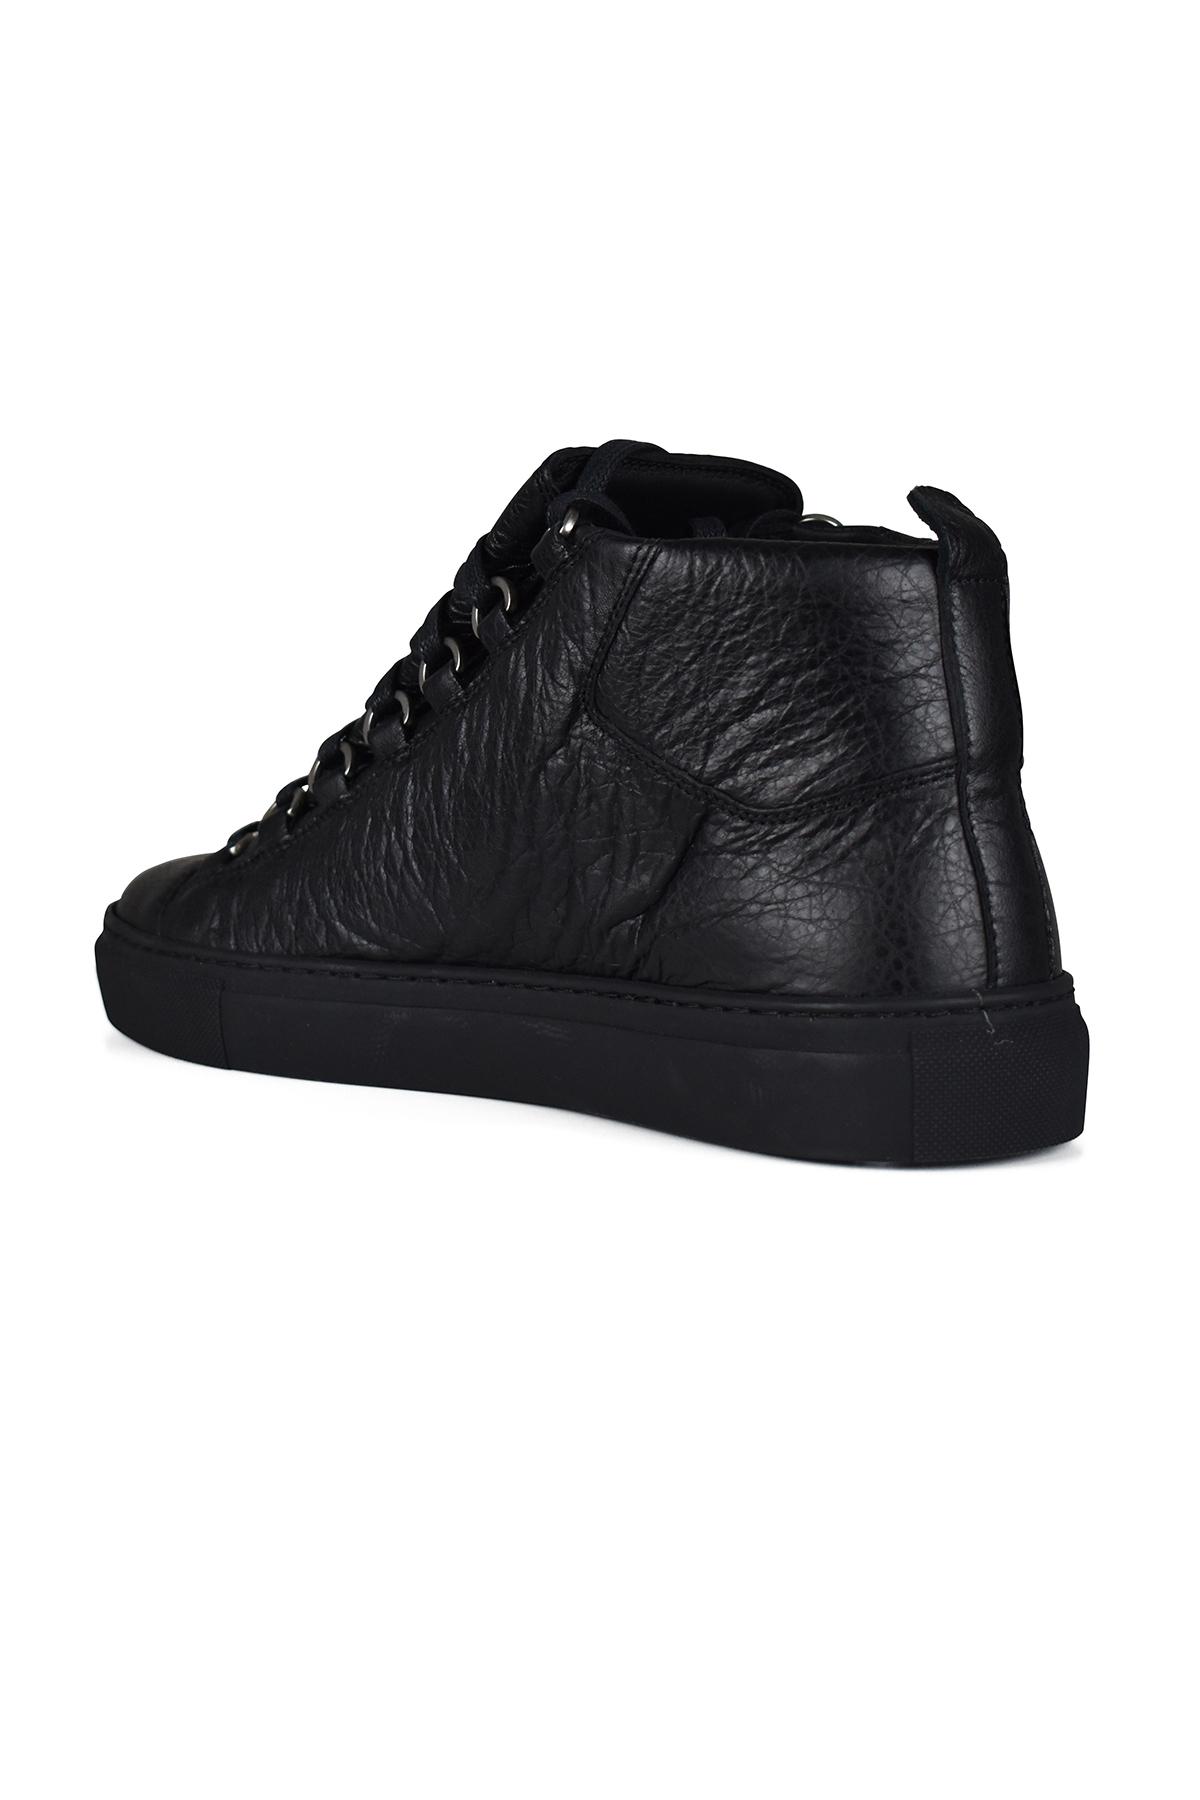 Balenciaga Arena Sneakers in Black | Lyst